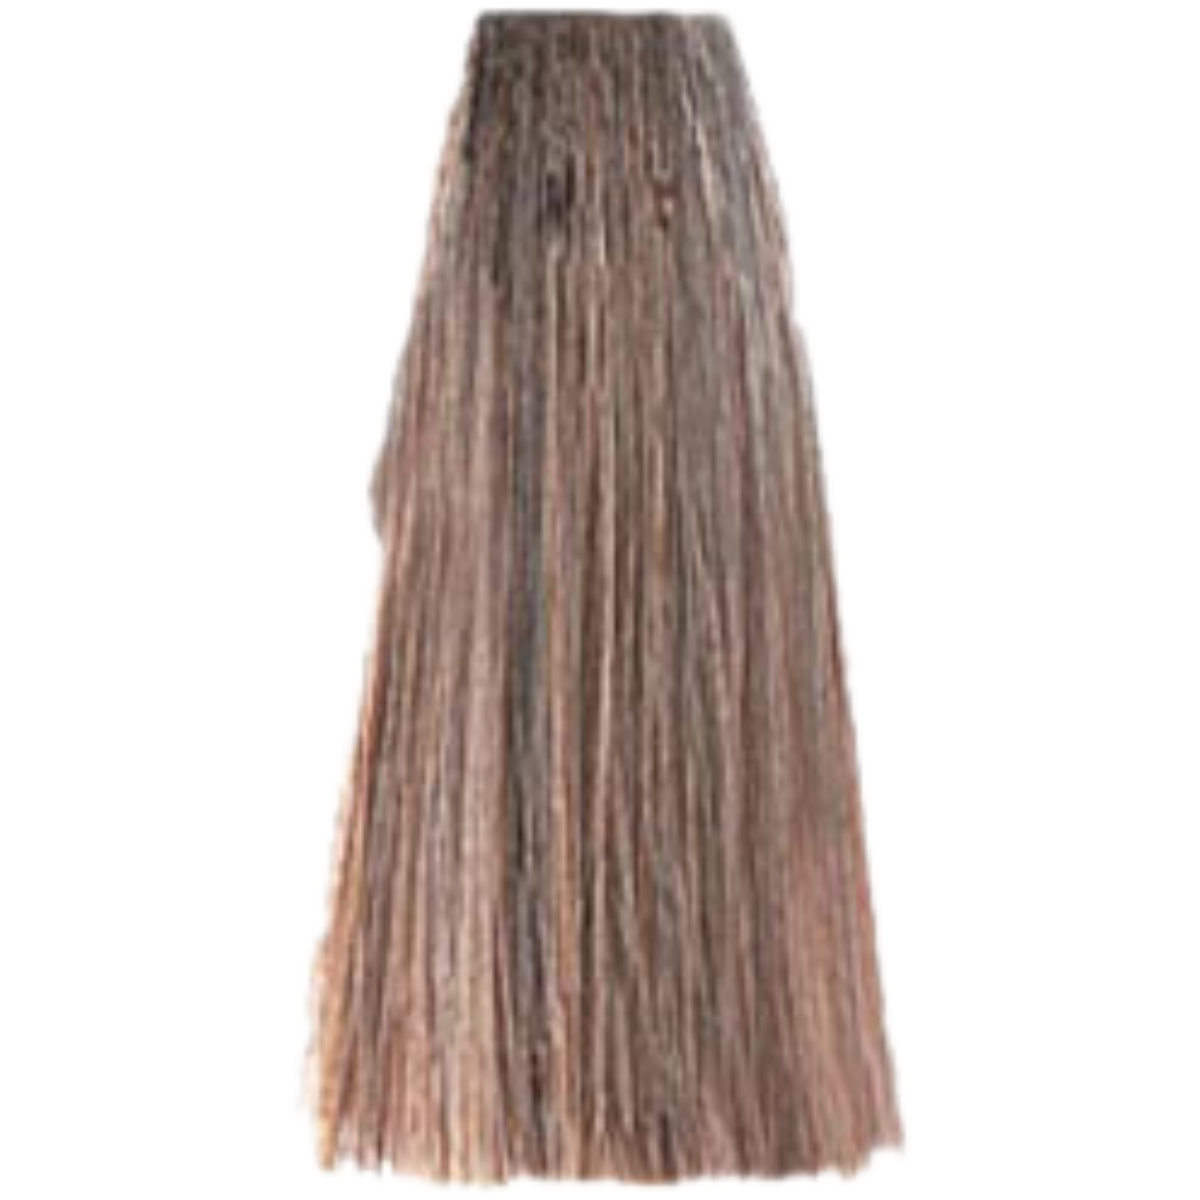 צבע שיער 8.07 LIGHT MAT BLONDE פארמויטה FarmaVita צבע לשיער 100 גרם